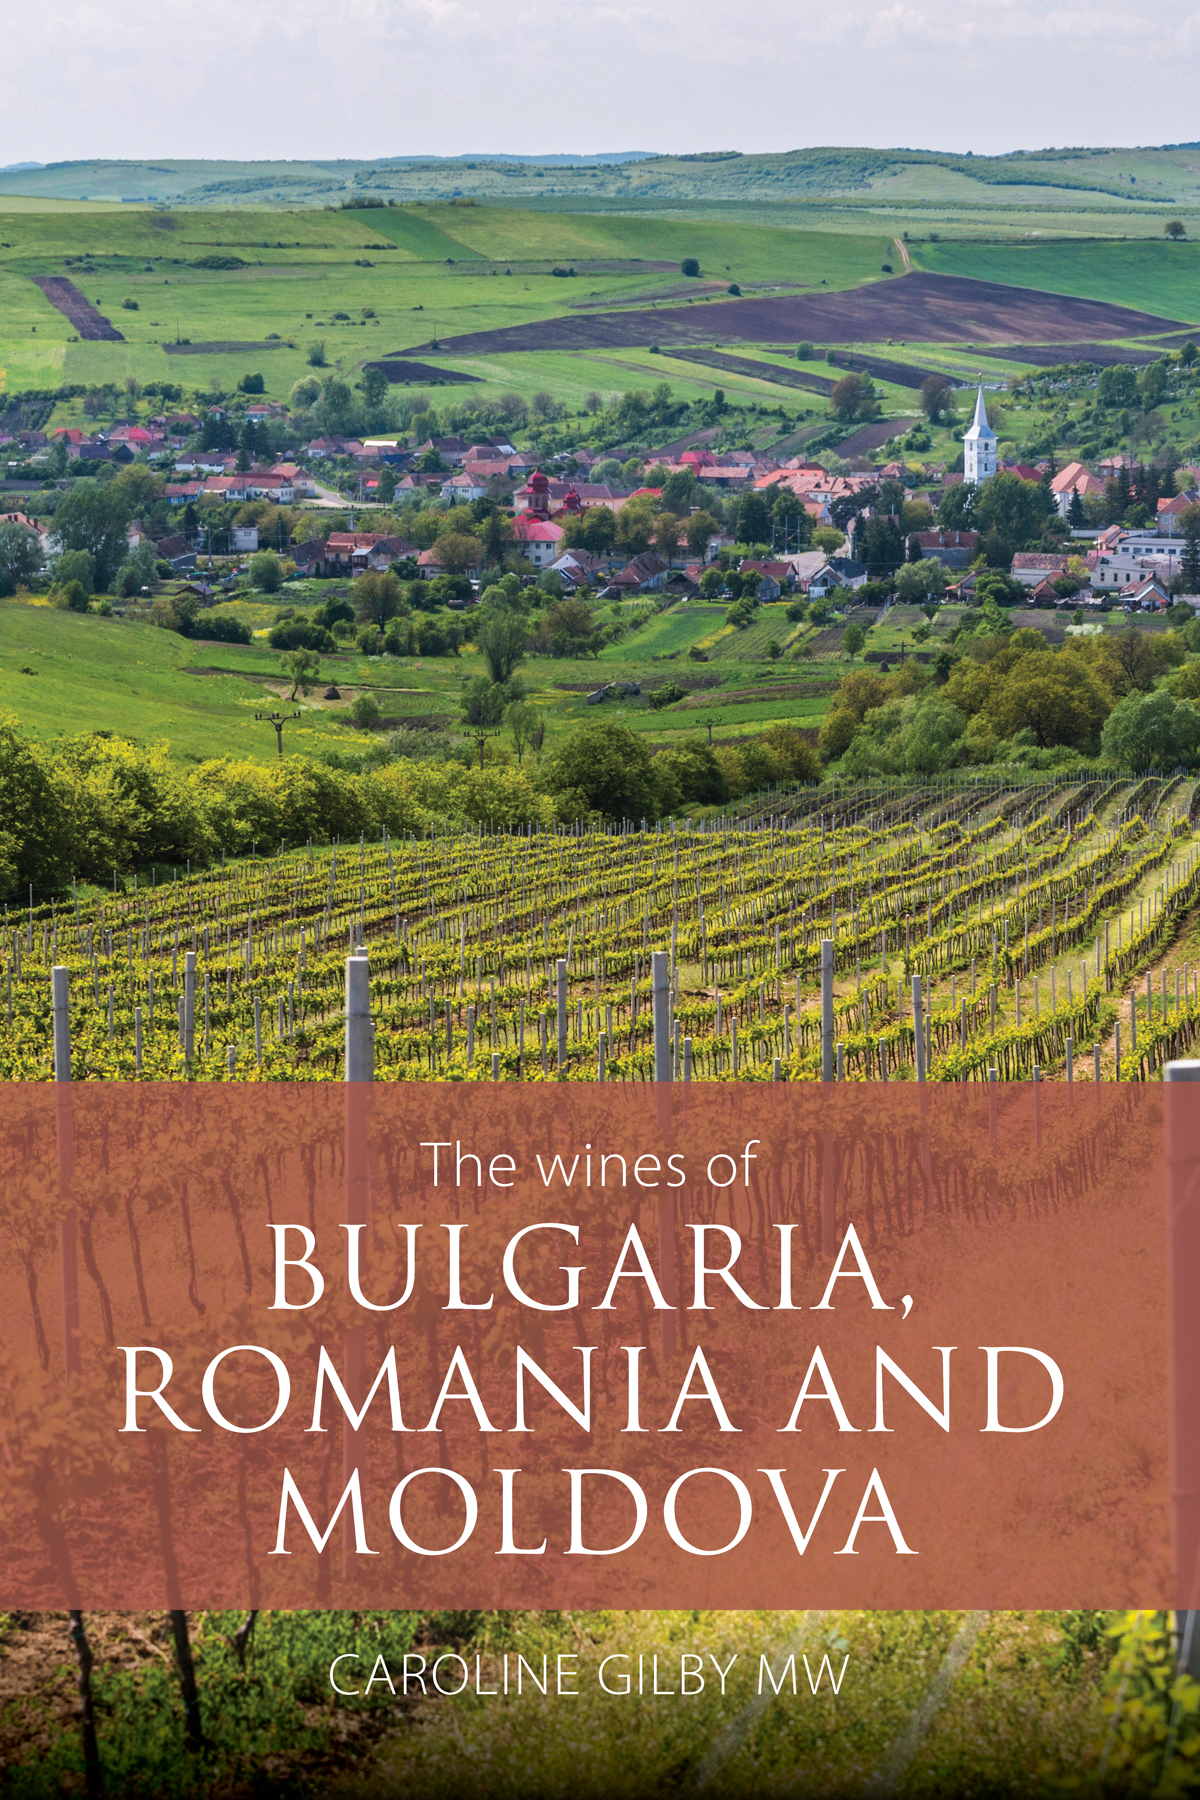 Extract: The wines of Bulgaria, Romania and Moldova, by Caroline Gilby MW